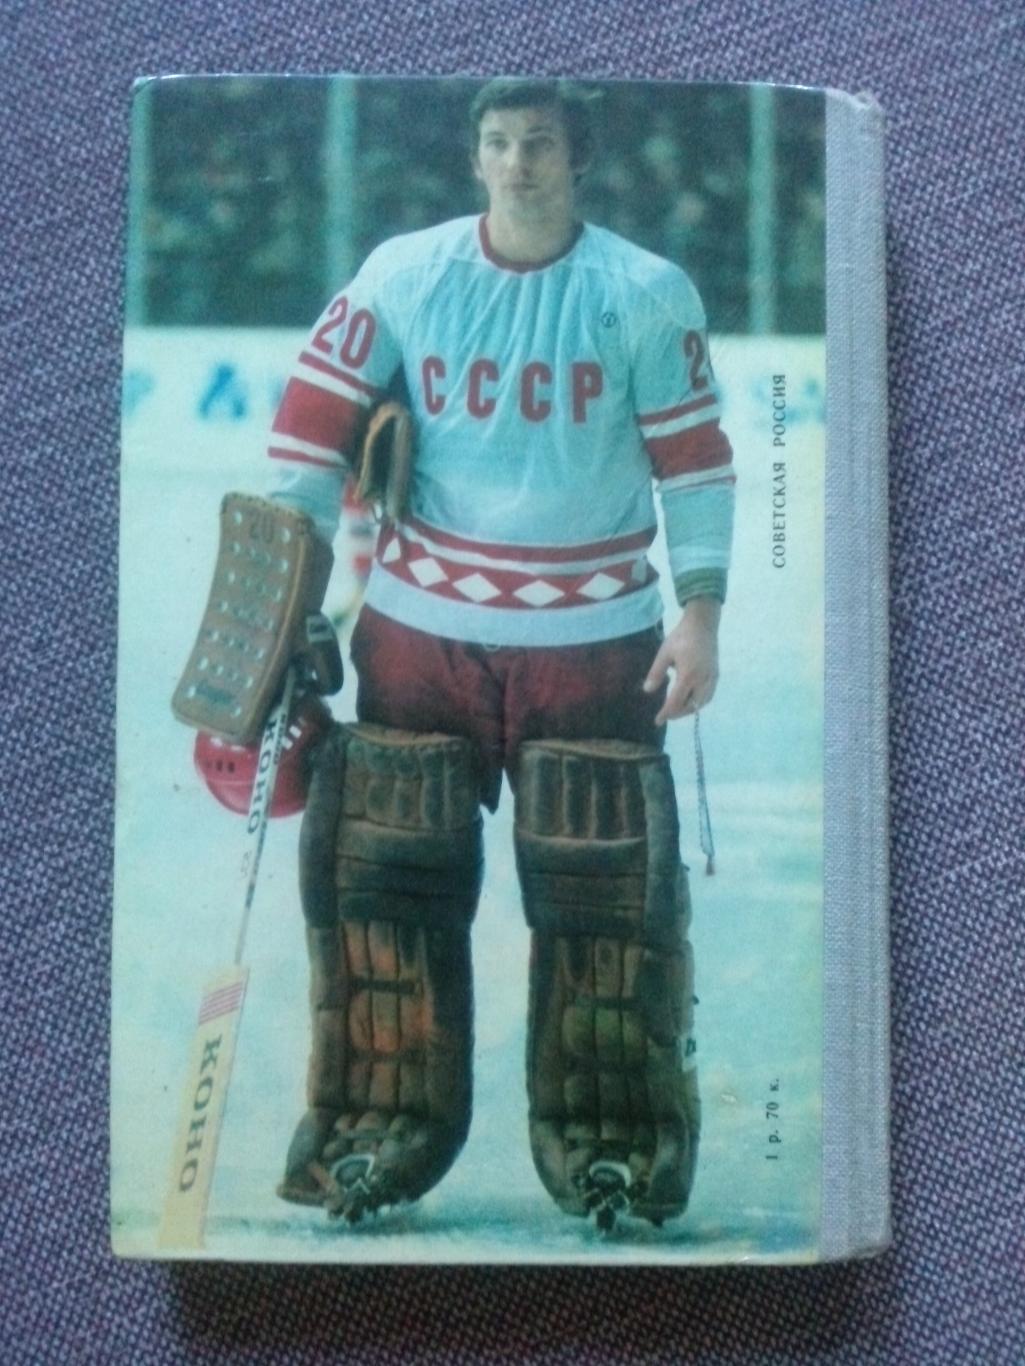 Владислав Третьяк - Когда на льду жарко 1981 г.ХК ЦСКА (Москва) Хоккей Спорт 1